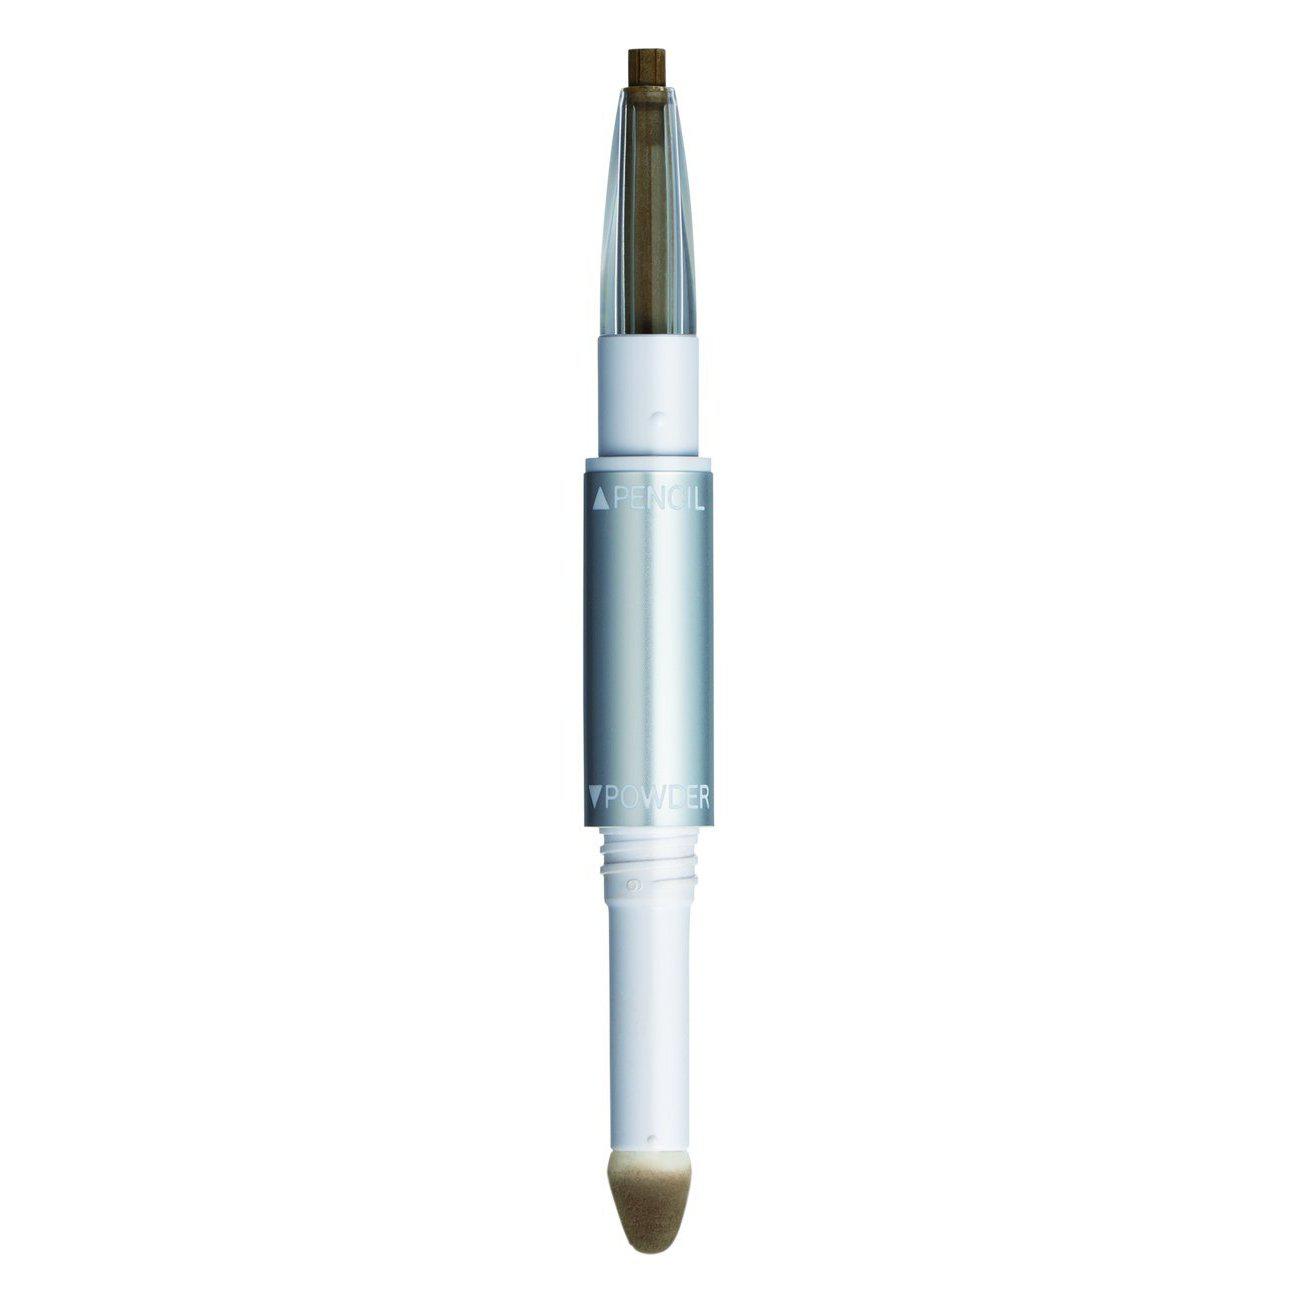 SANA NewBorn W Brow EX Eyebrow Pencil, Powder and Brush